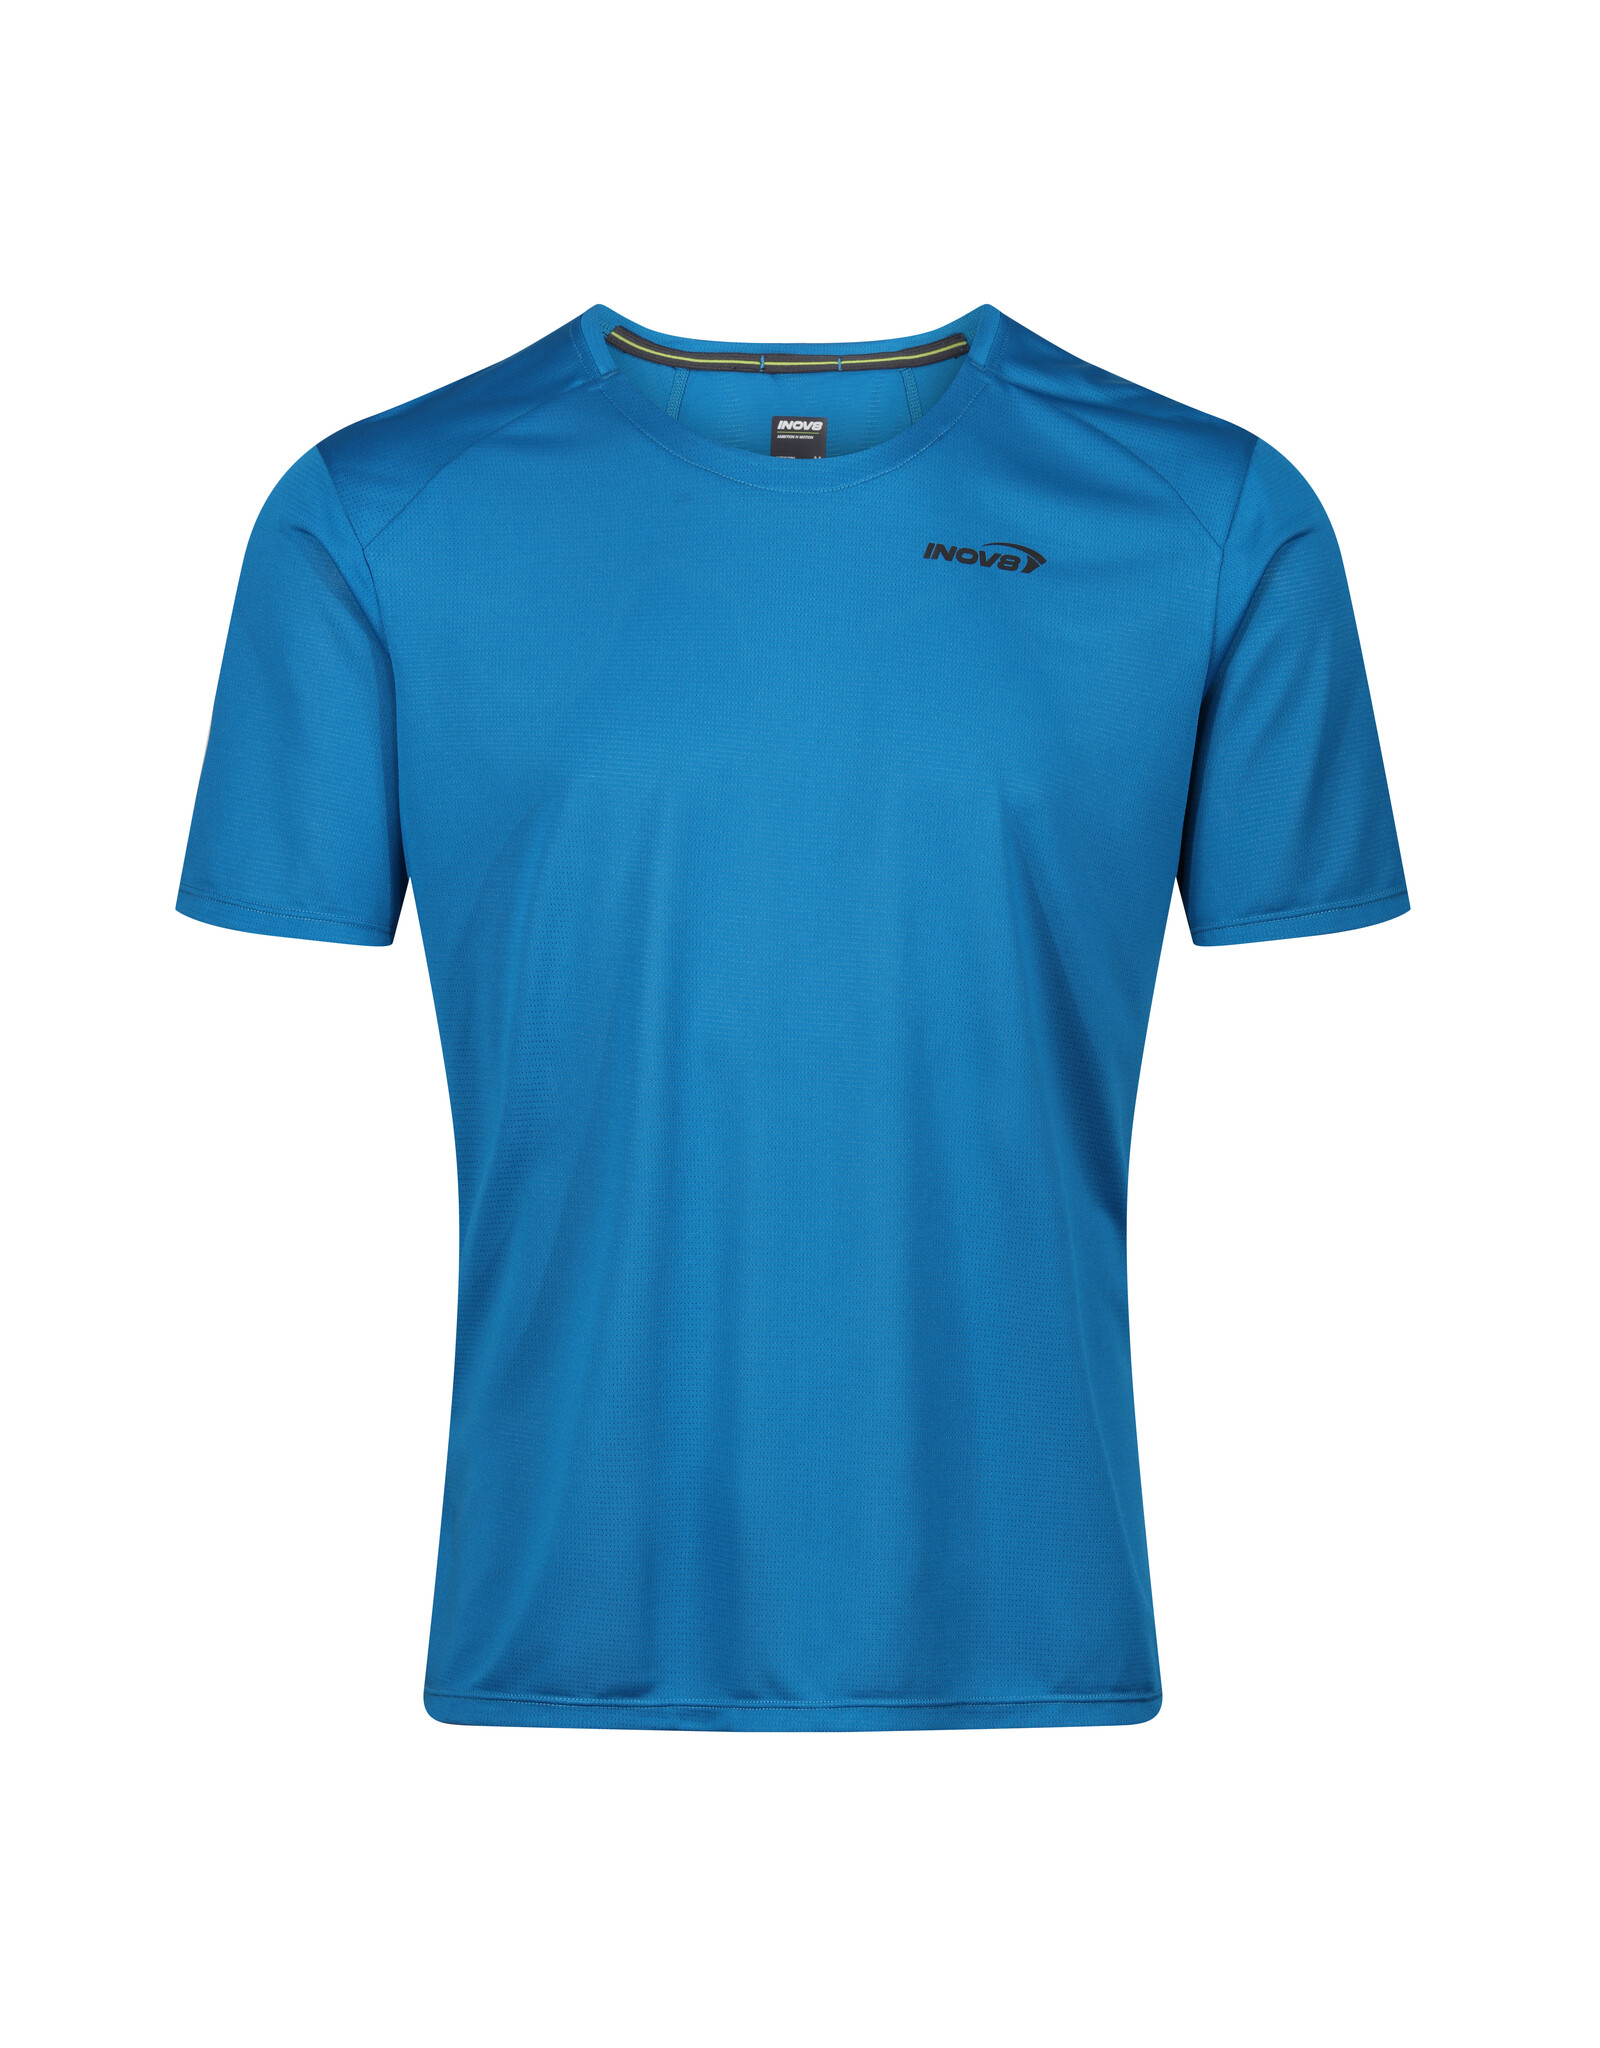 Inov-8 Performance Short Sleeve T-Shirt - Homme - Blue/Navy